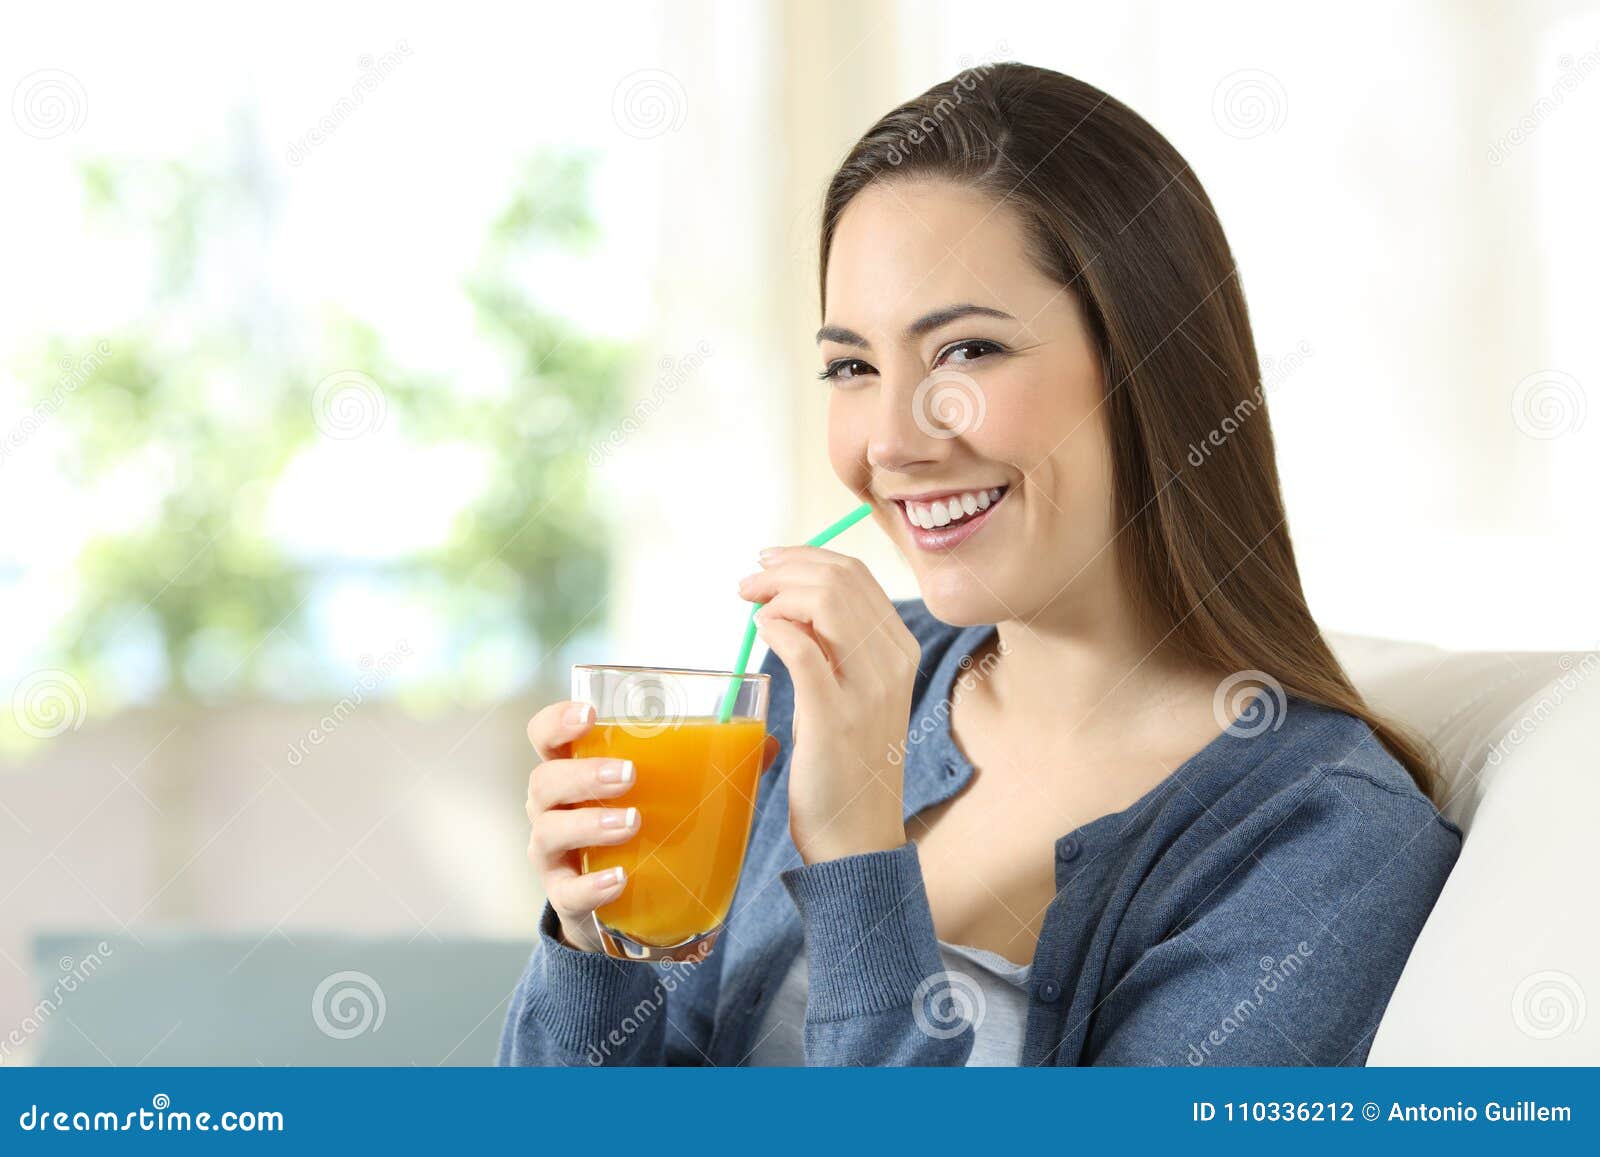 Pretty Woman Drinking Orange Juice Looking at Camera Stock Photo ...